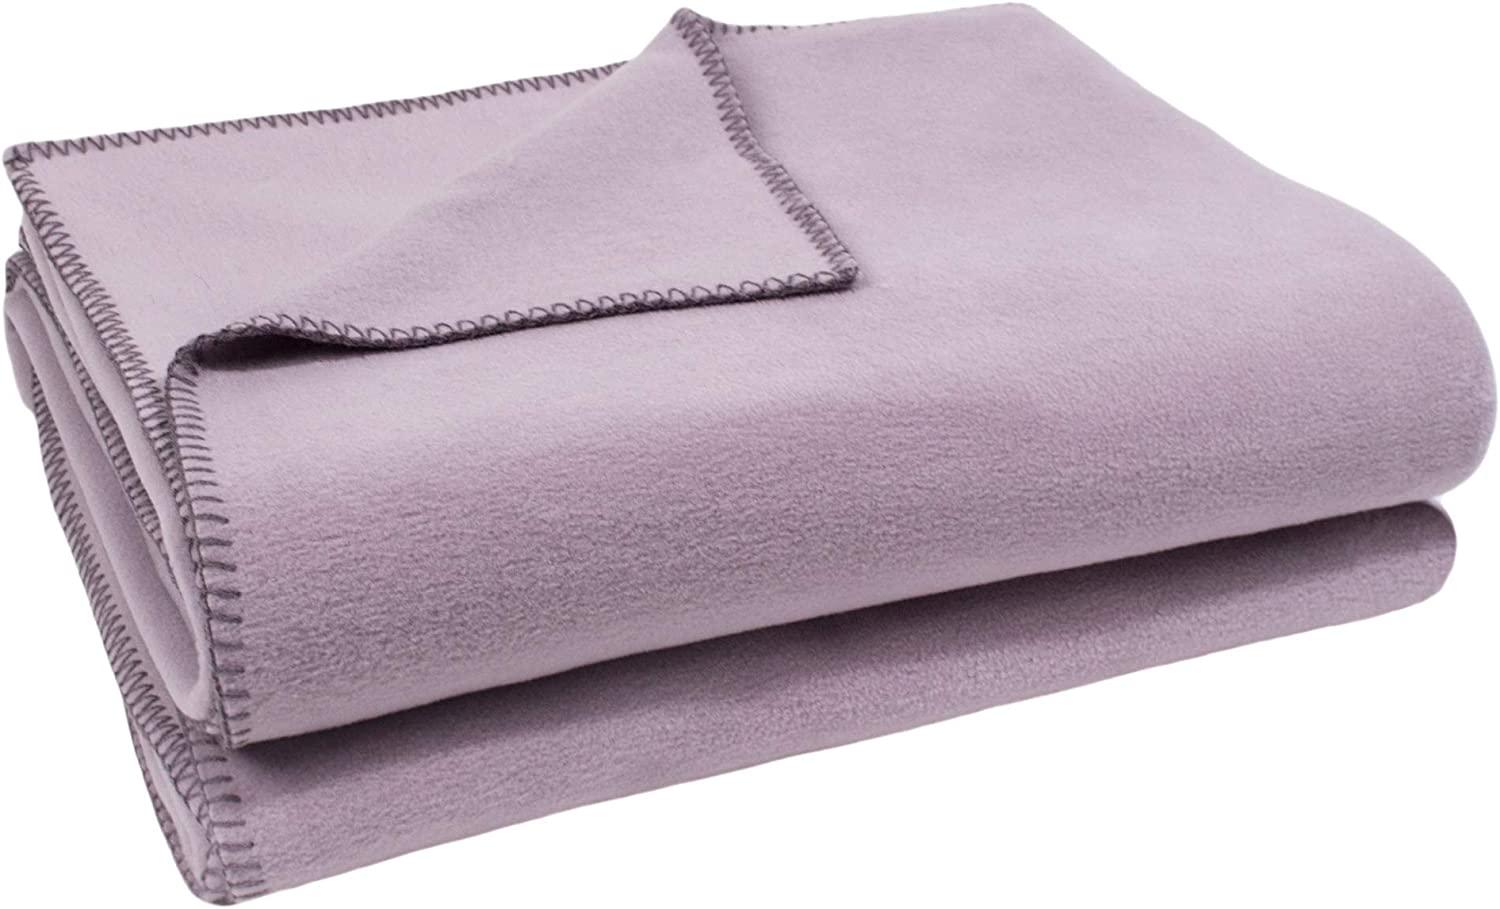 Zoeppritz Soft-Fleece pale lavender 180x220 103291-405 Bild 1